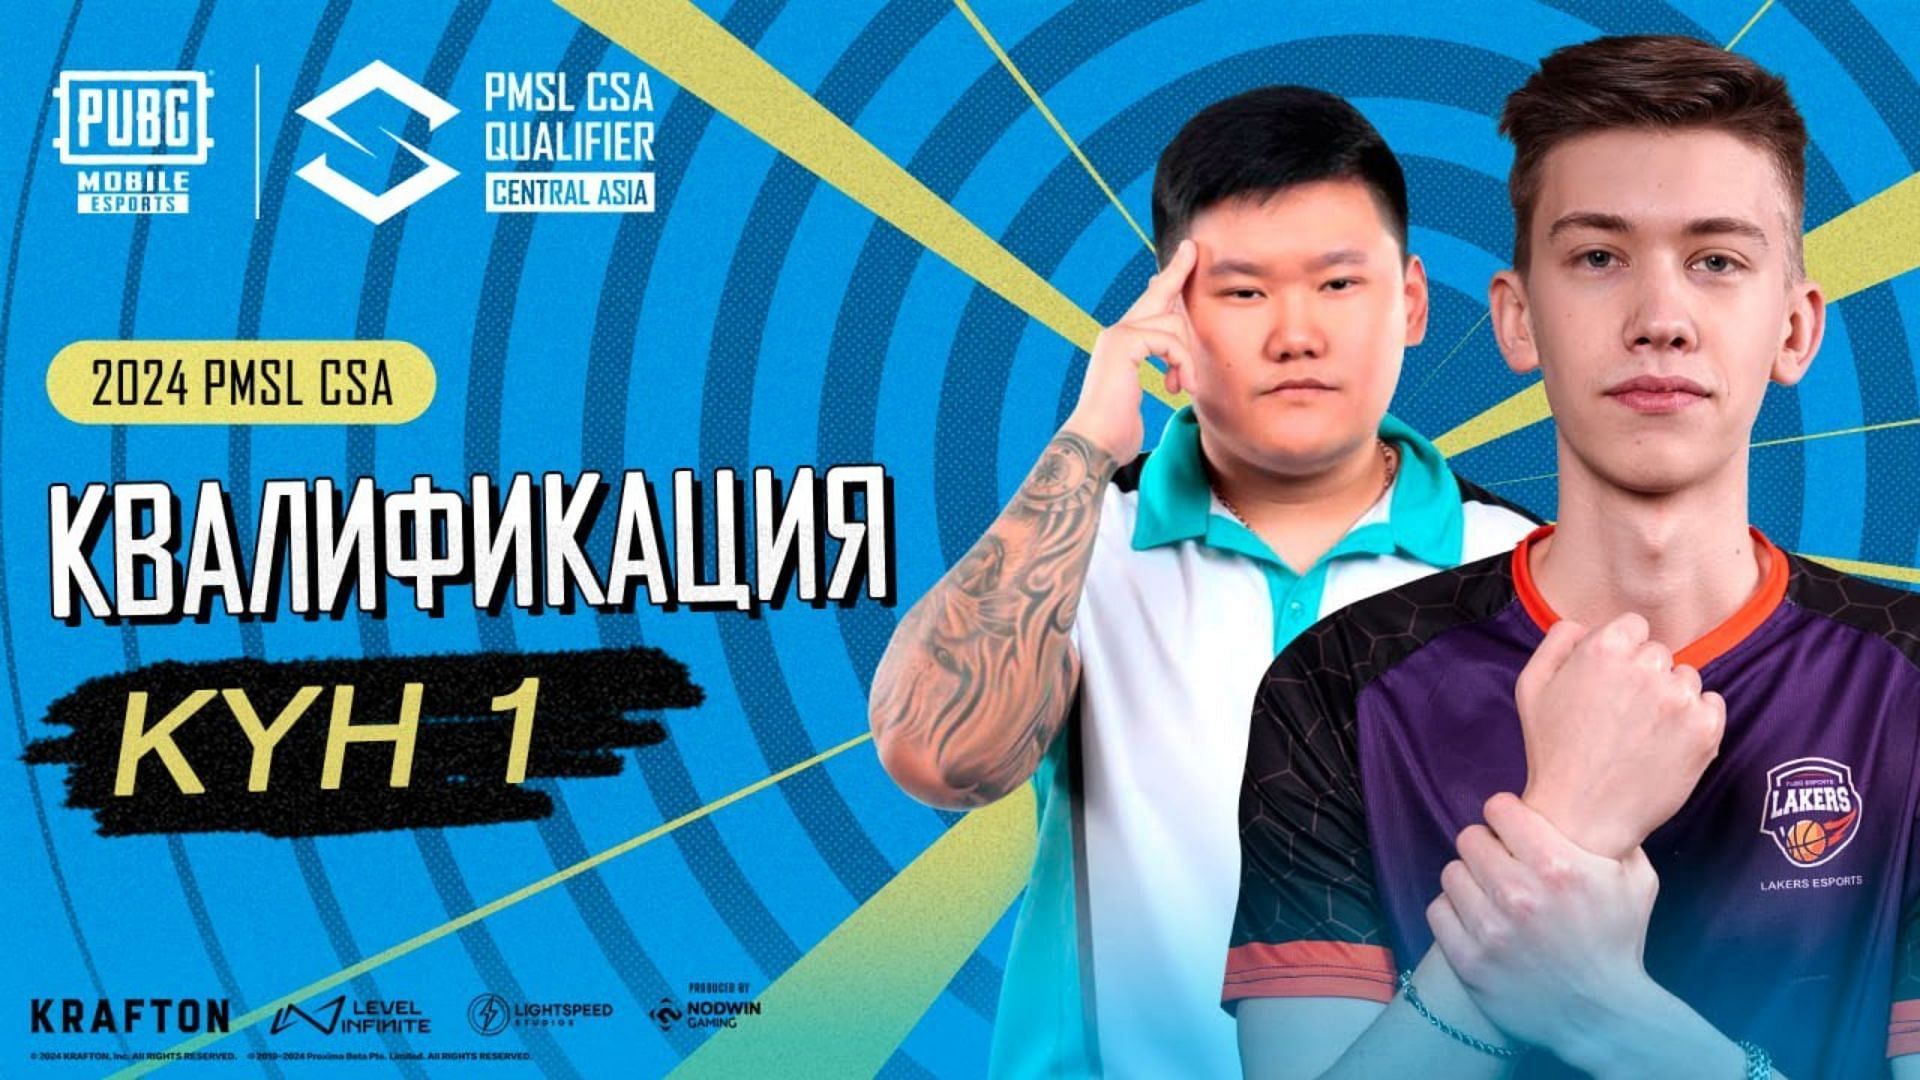 PMSL CSA 2024 Central Asia Qualifier starts on April 25 (Image via PUBG Mobile)